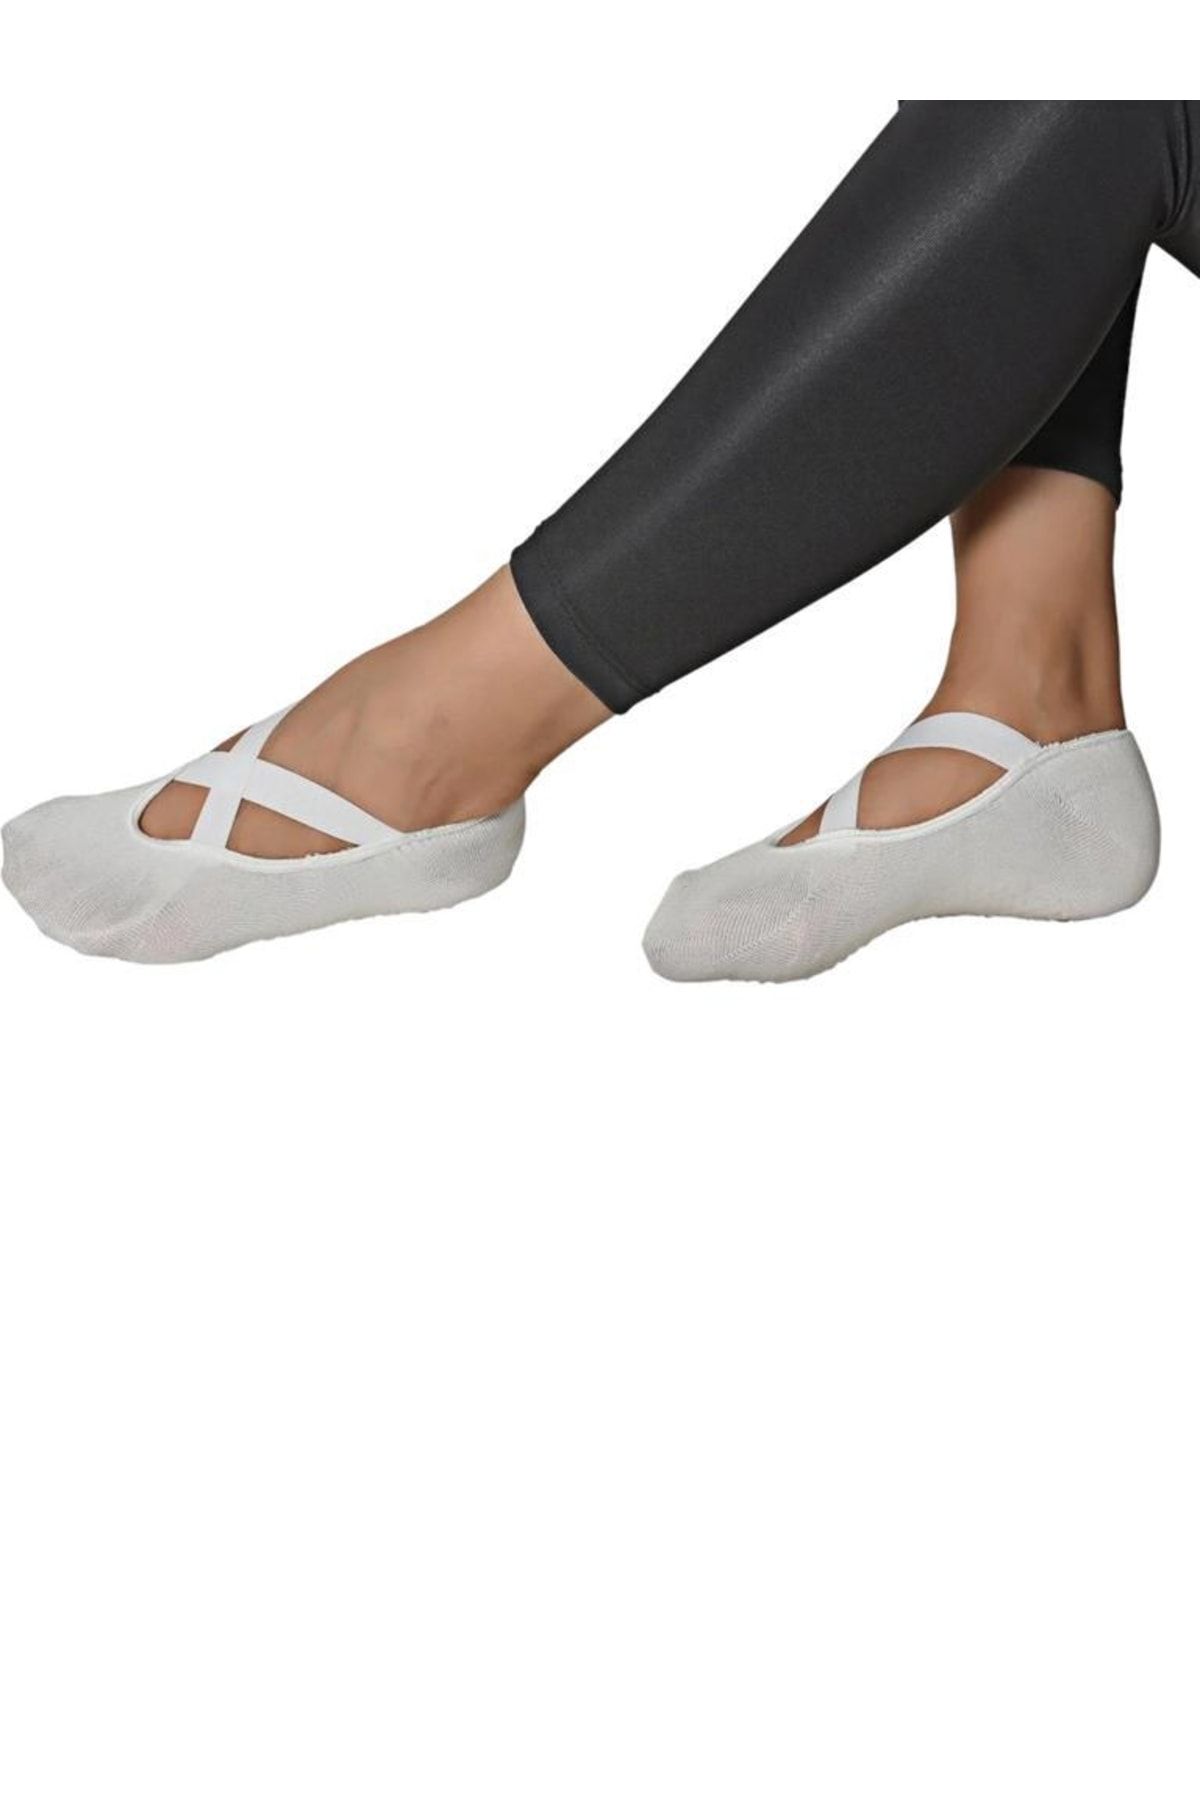 REMEGE Yoga Socks - Yoga Belt Set of Two / Non-Slip Pilates Socks